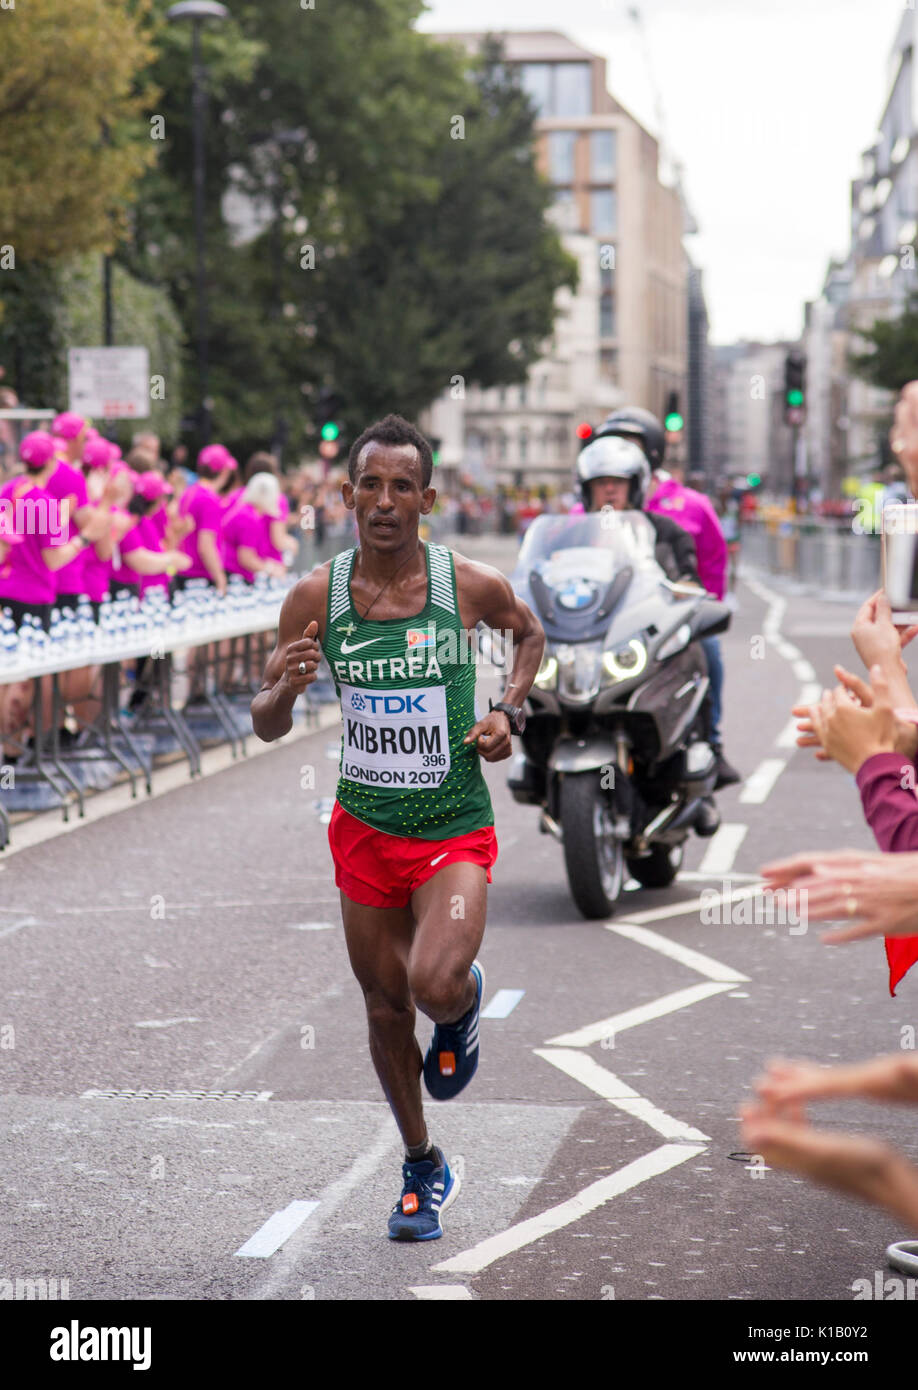 6 Aug '17 London: Eritrean Ghebrezgiaghier KIBROM passes water station during the IAAF 2017 World Athletics Championship men's marathon Stock Photo